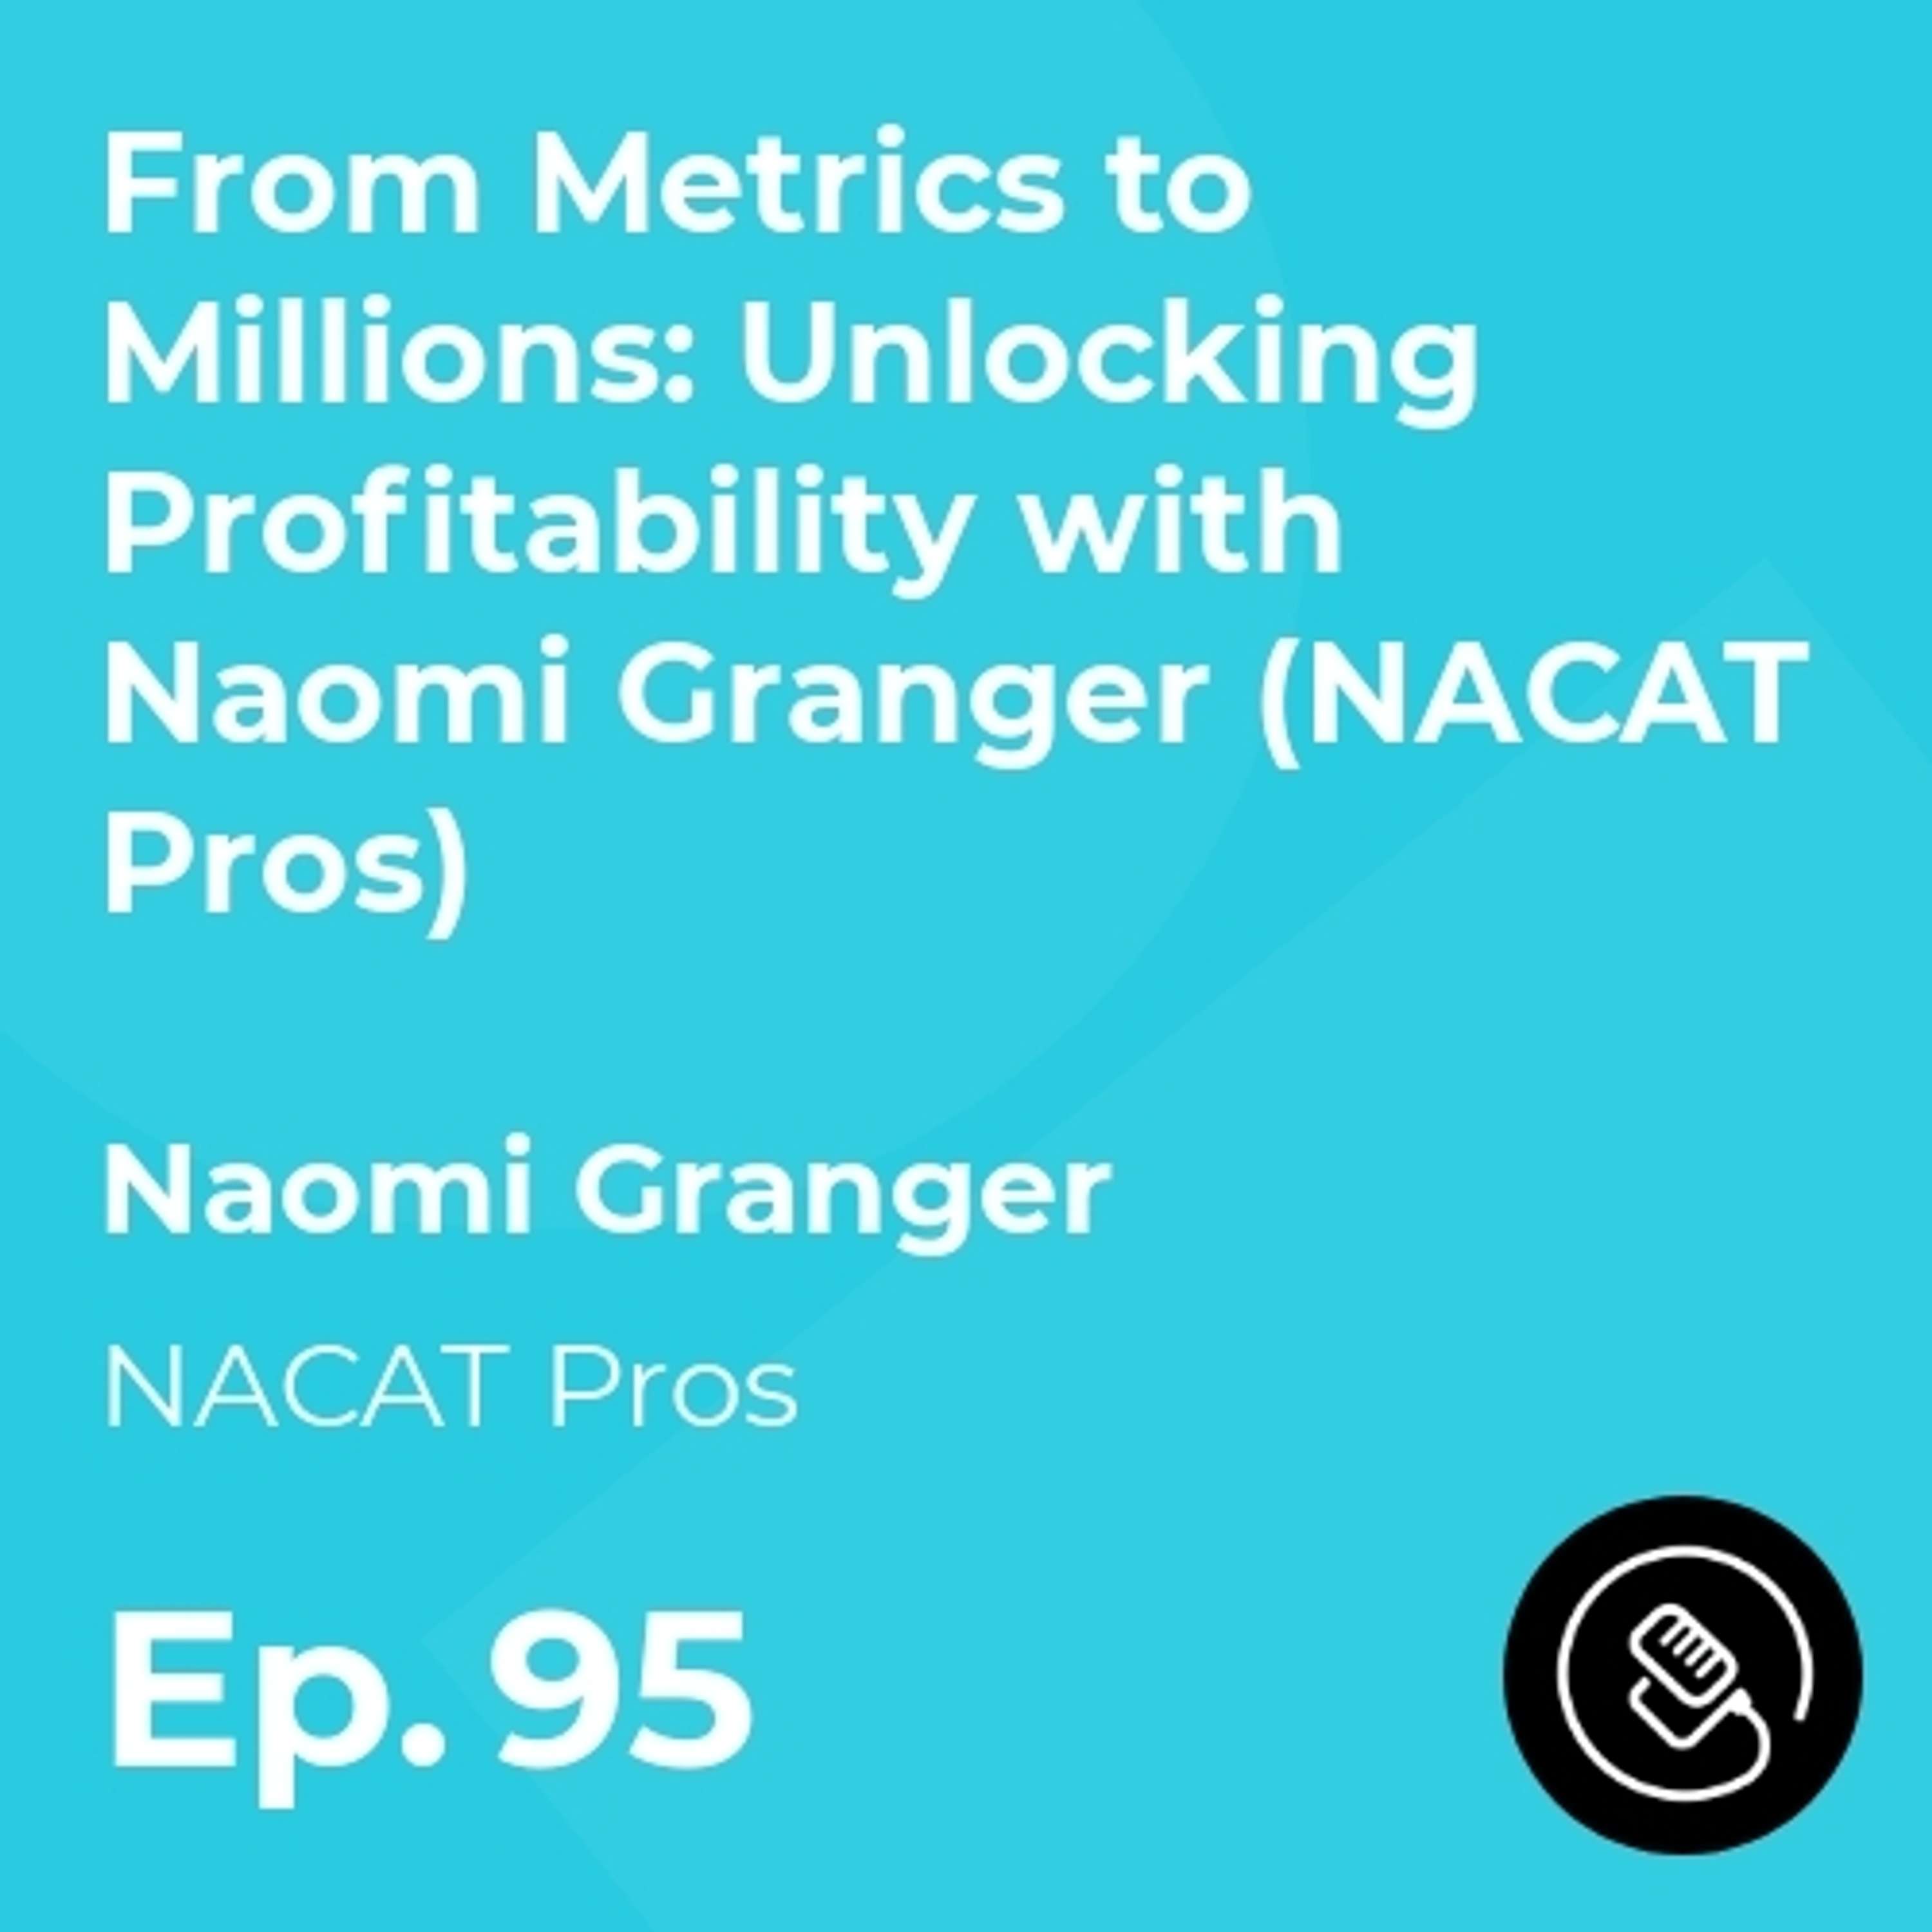 From Metrics to Millions: Unlocking Profitability with Naomi Granger (NACAT Pros)